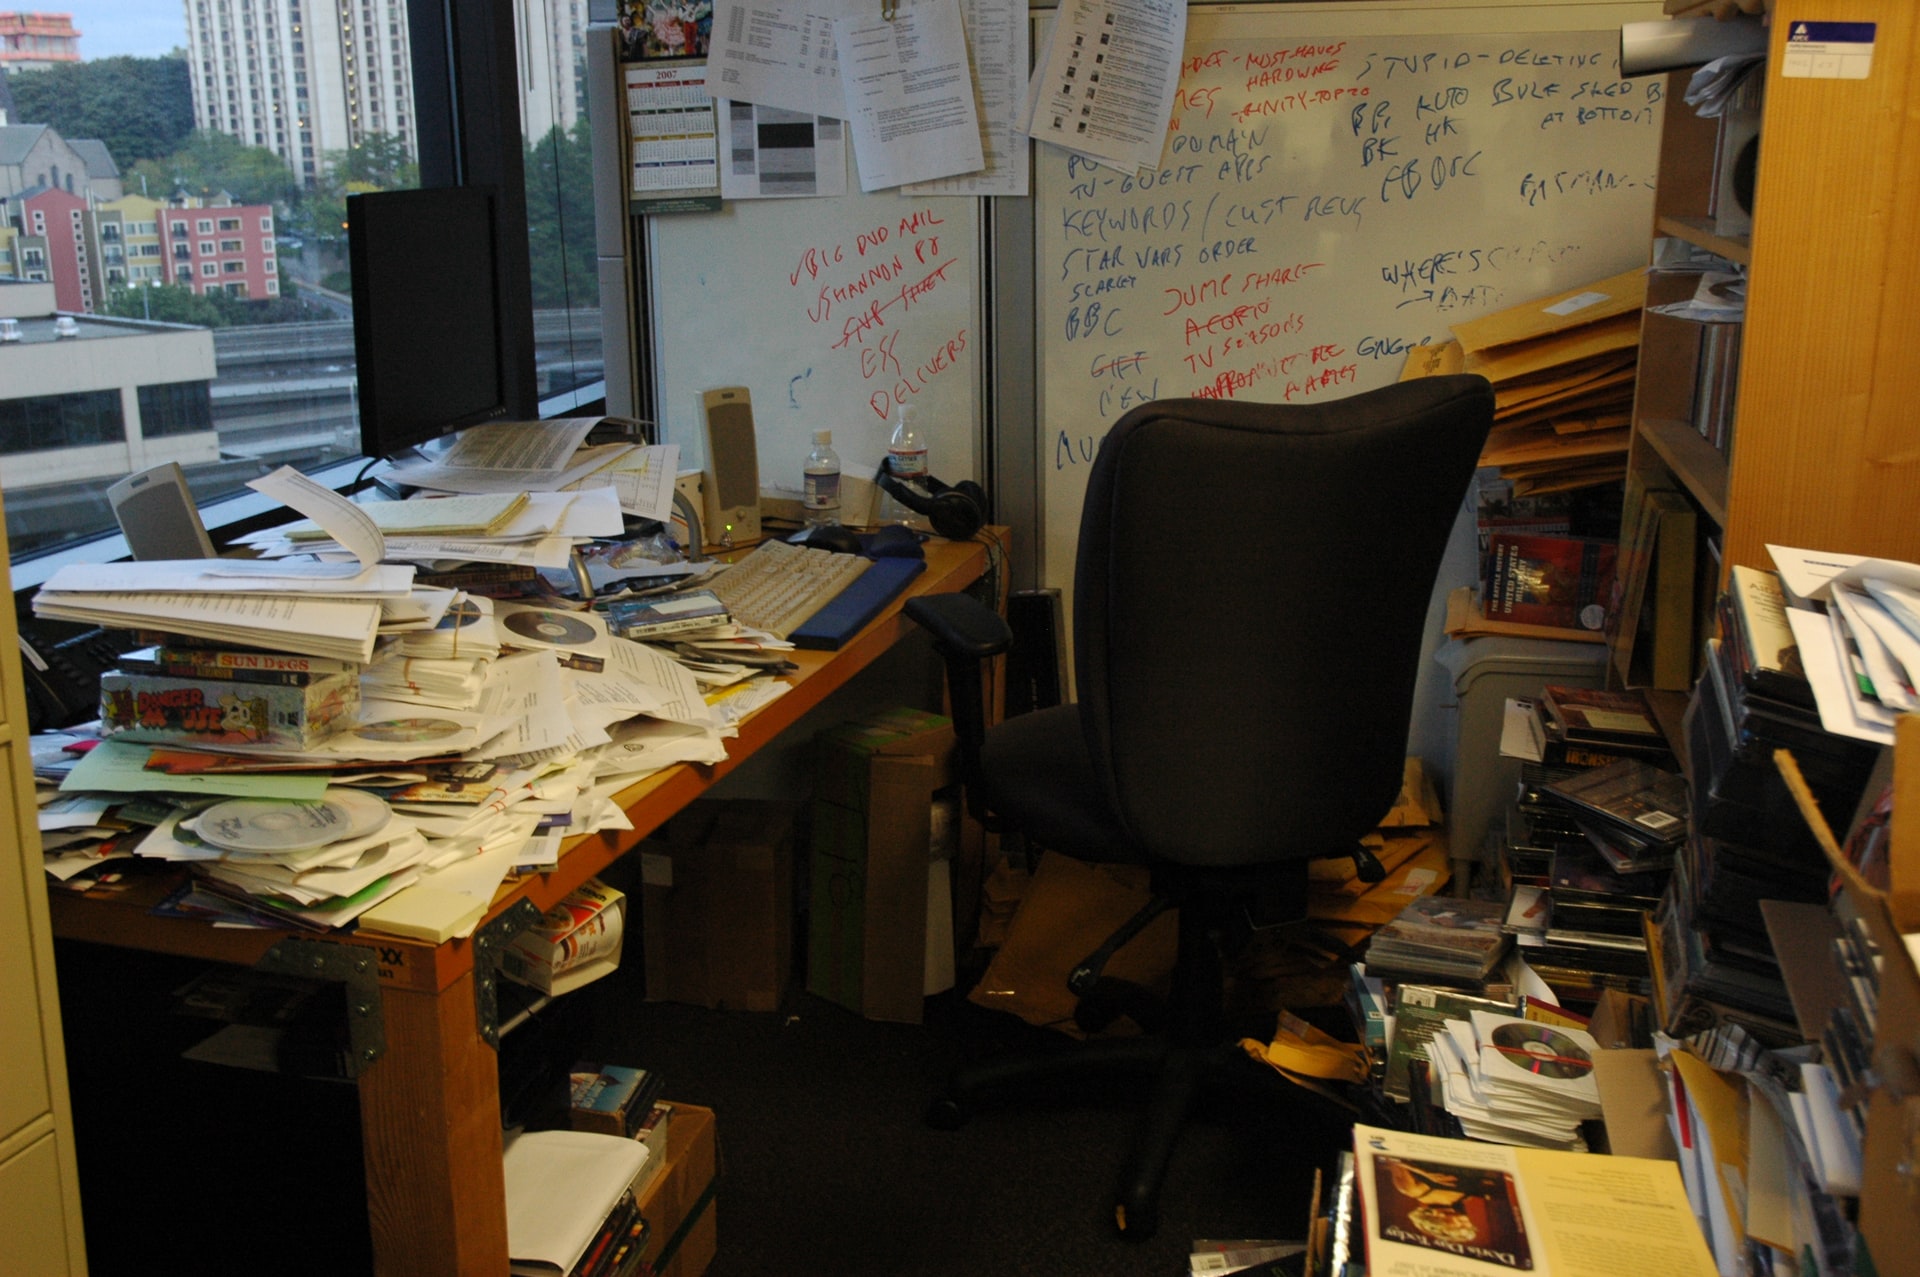 Incredibly messy desk.